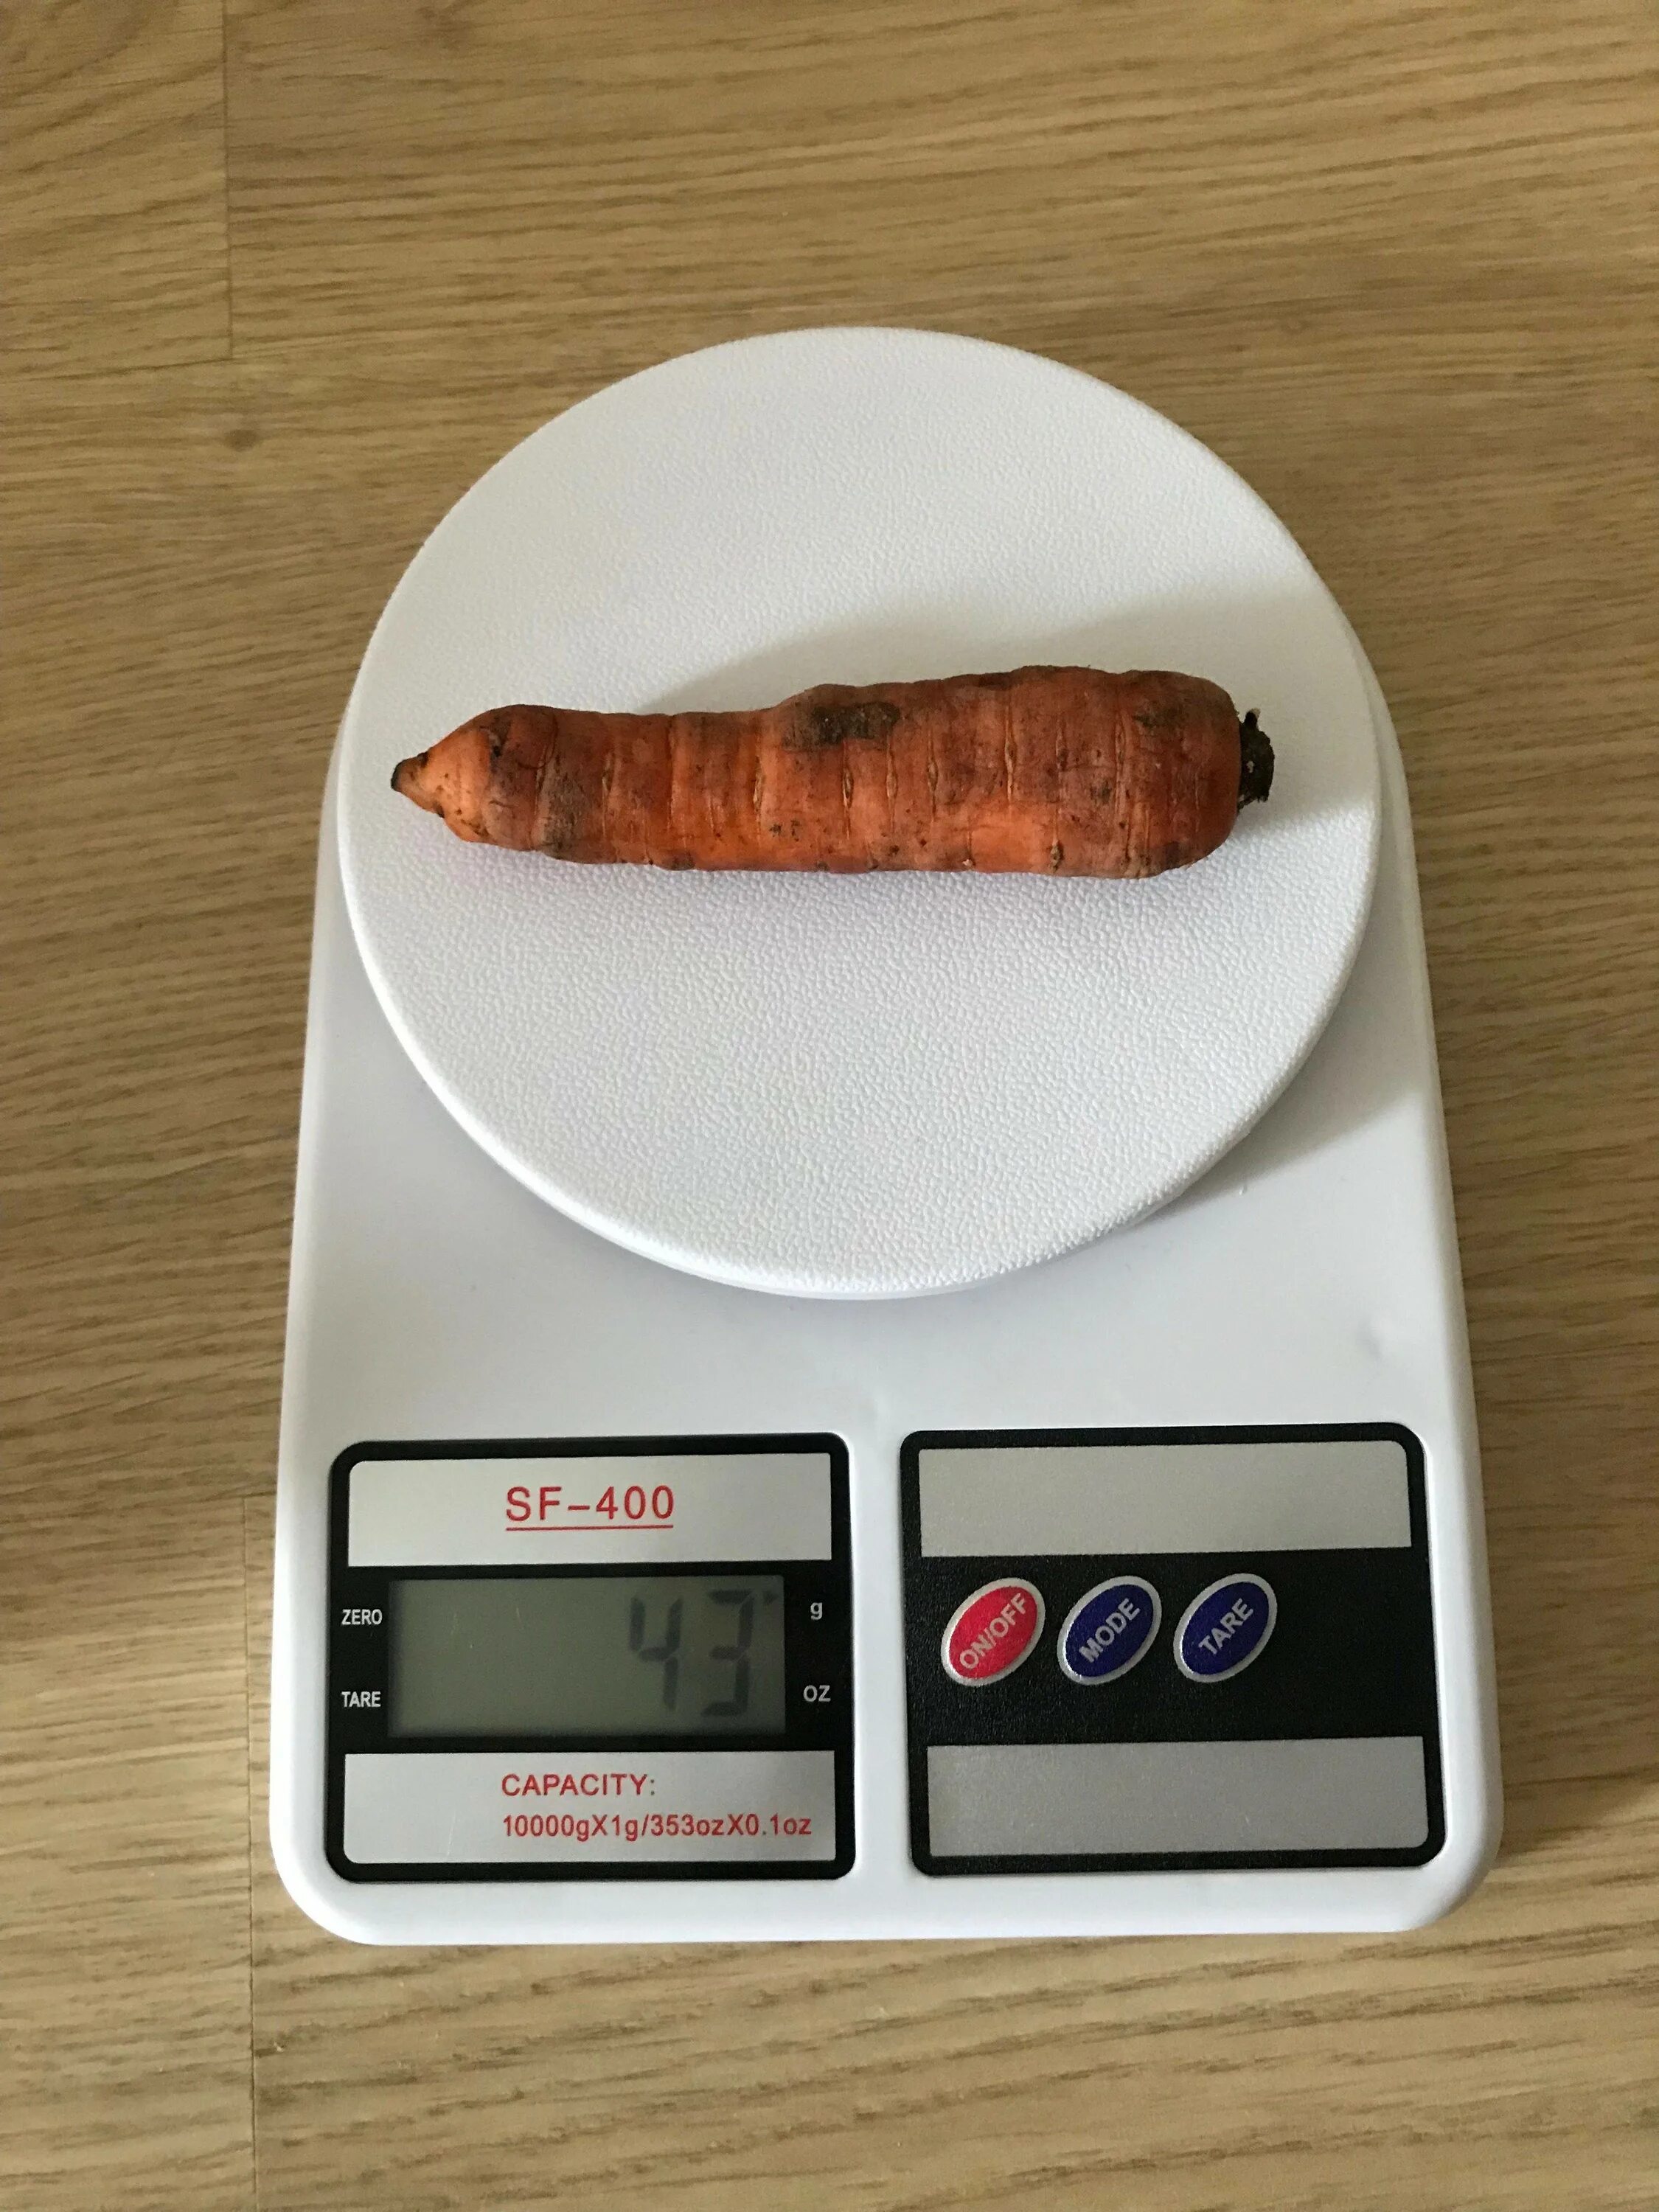 Морковь средний вес 1 шт. Вес 1 морковки. Средний вес одной моркови. Средний вестодной марковоь.